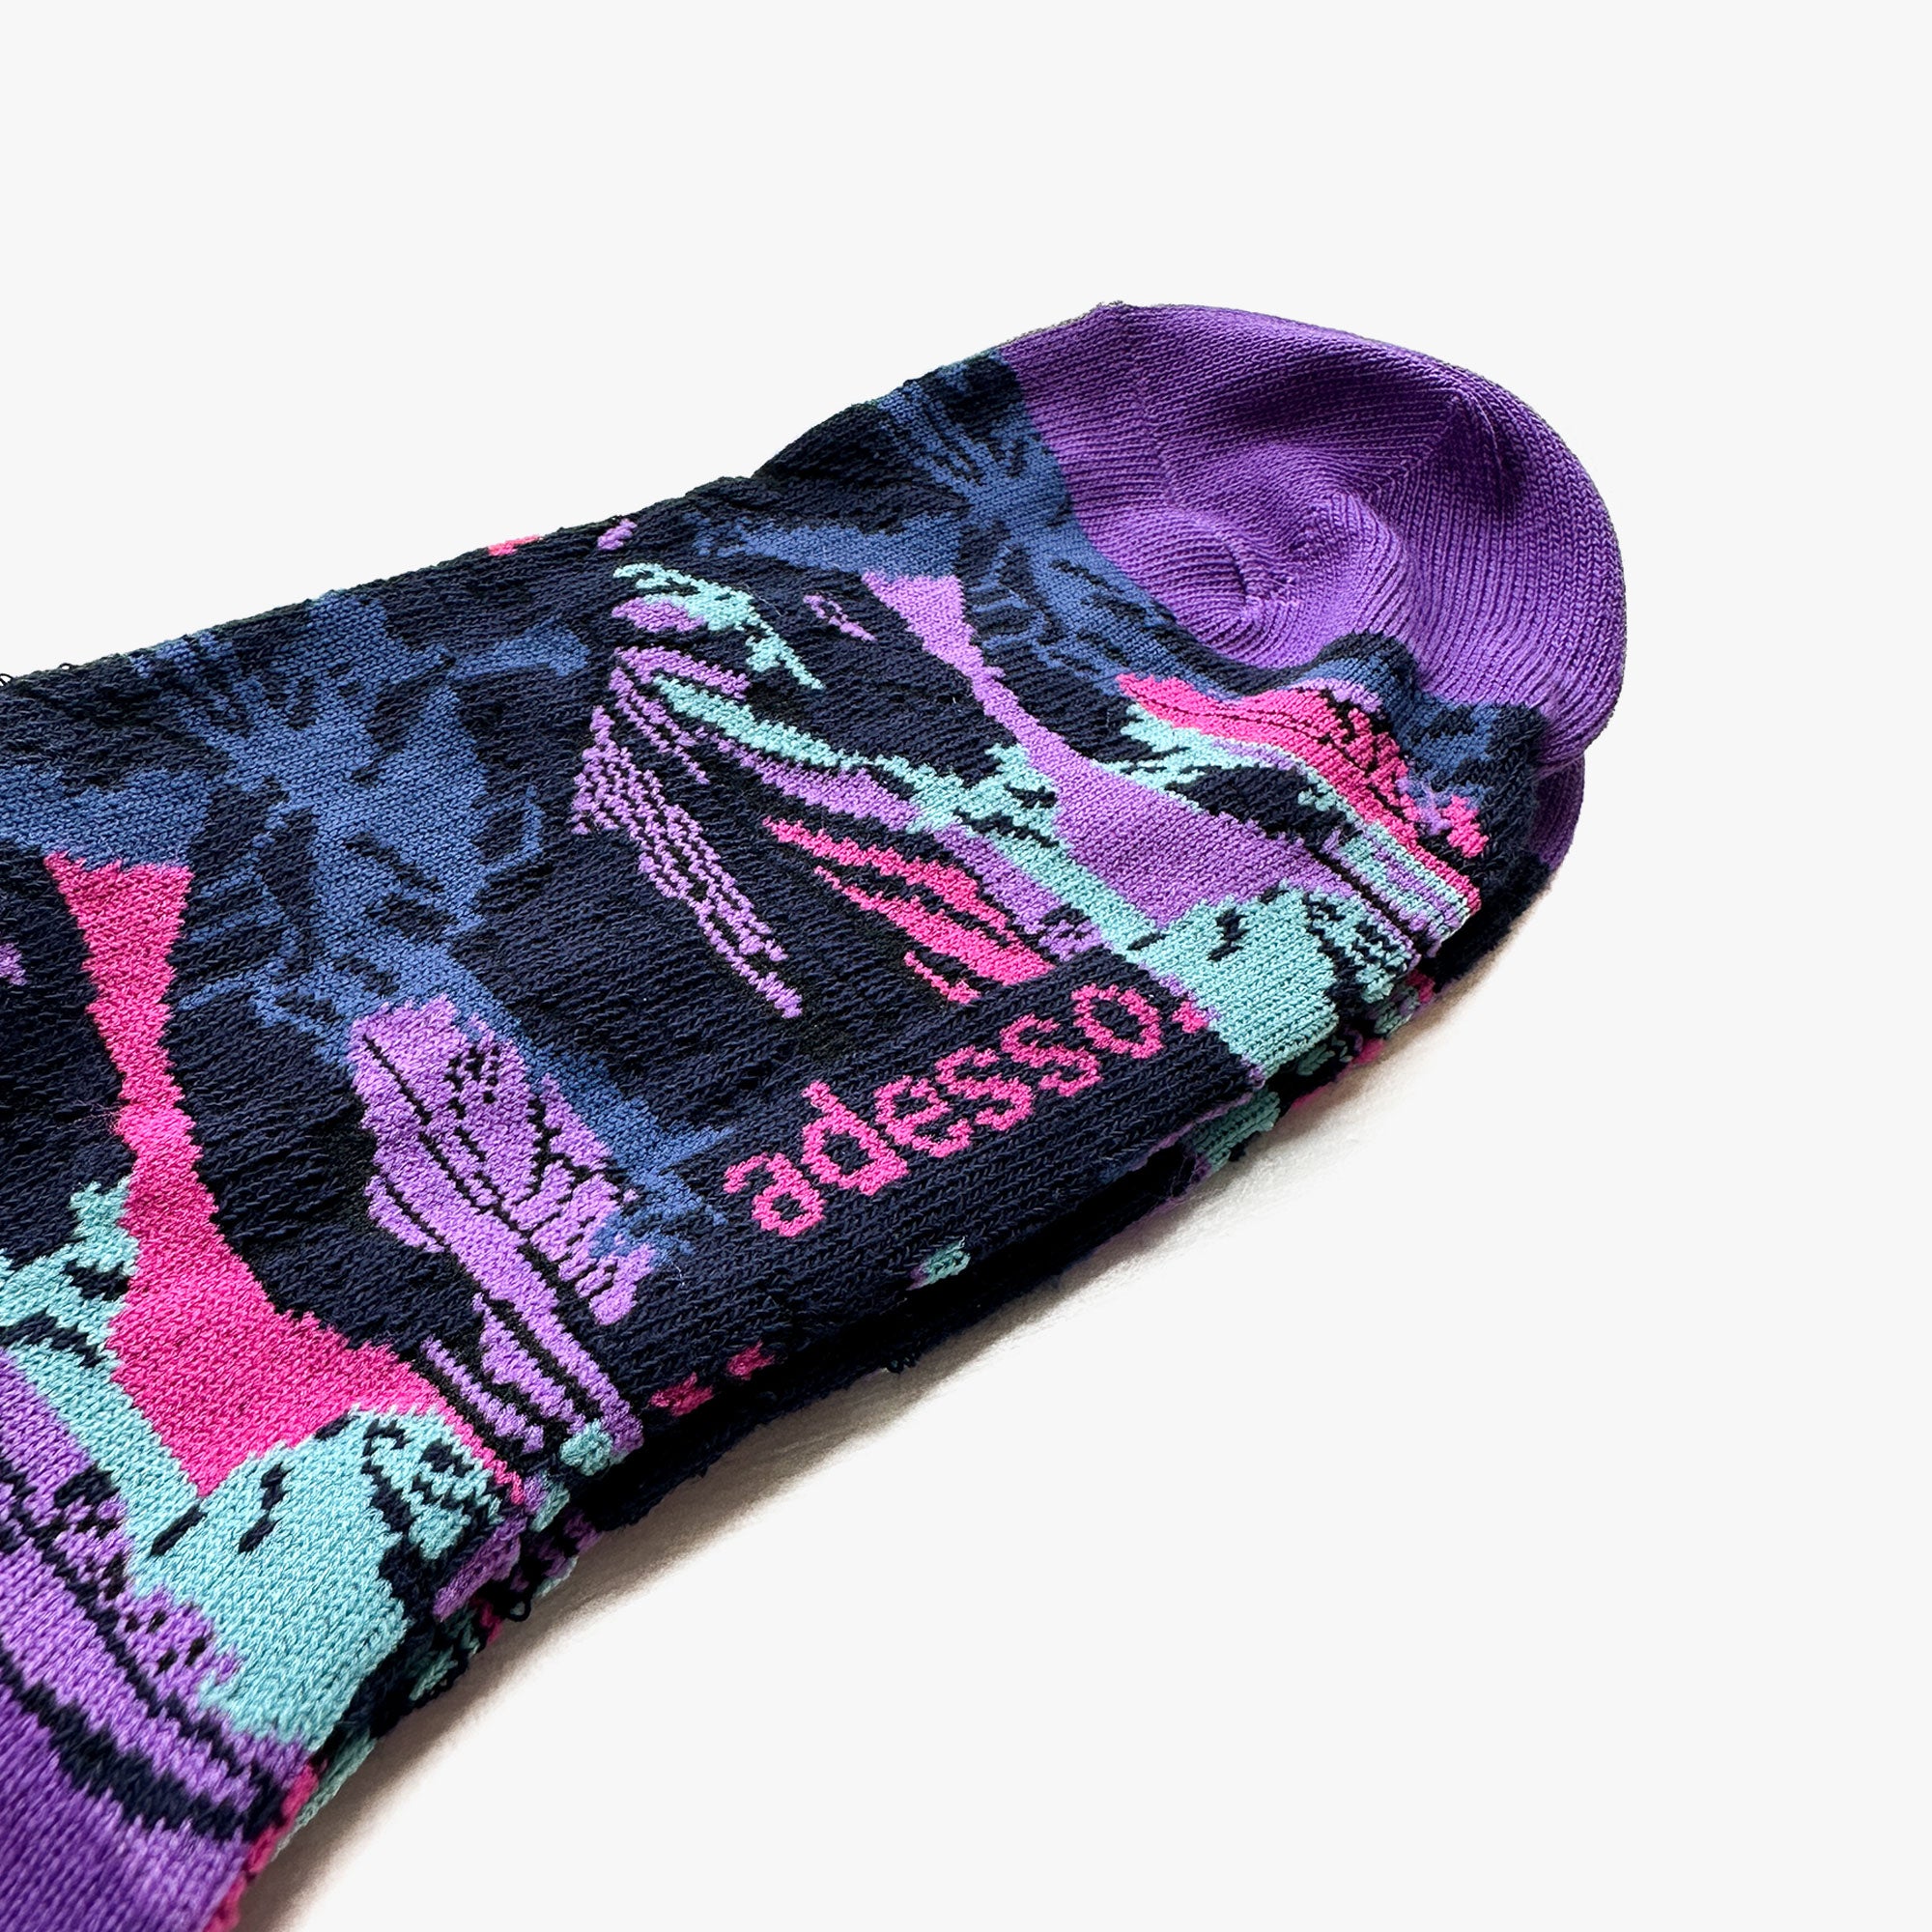 Neon Floral Socks